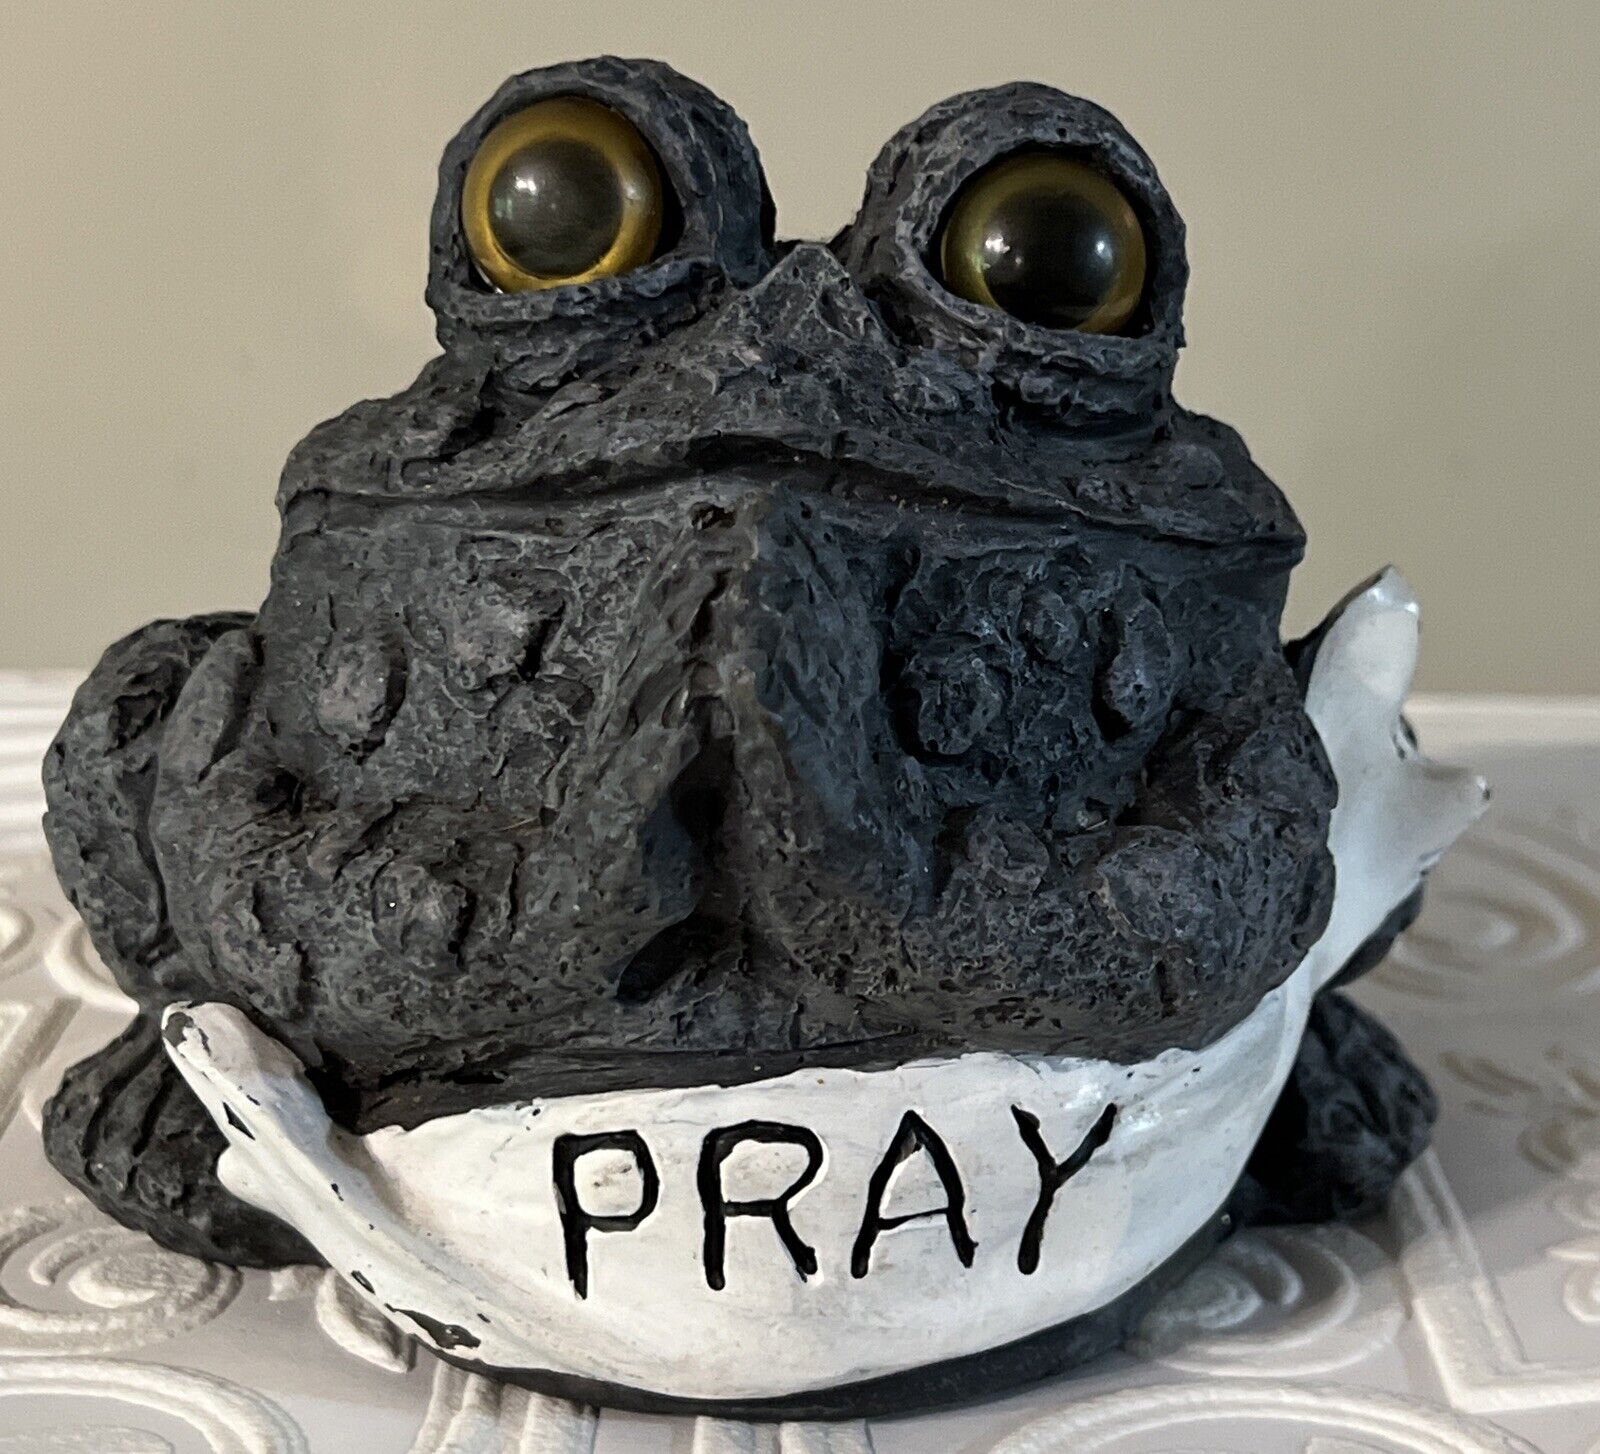 Vintage Toad Hollow Frog “PRAY” Figurine Statue Outdoor Garden Resin Gray